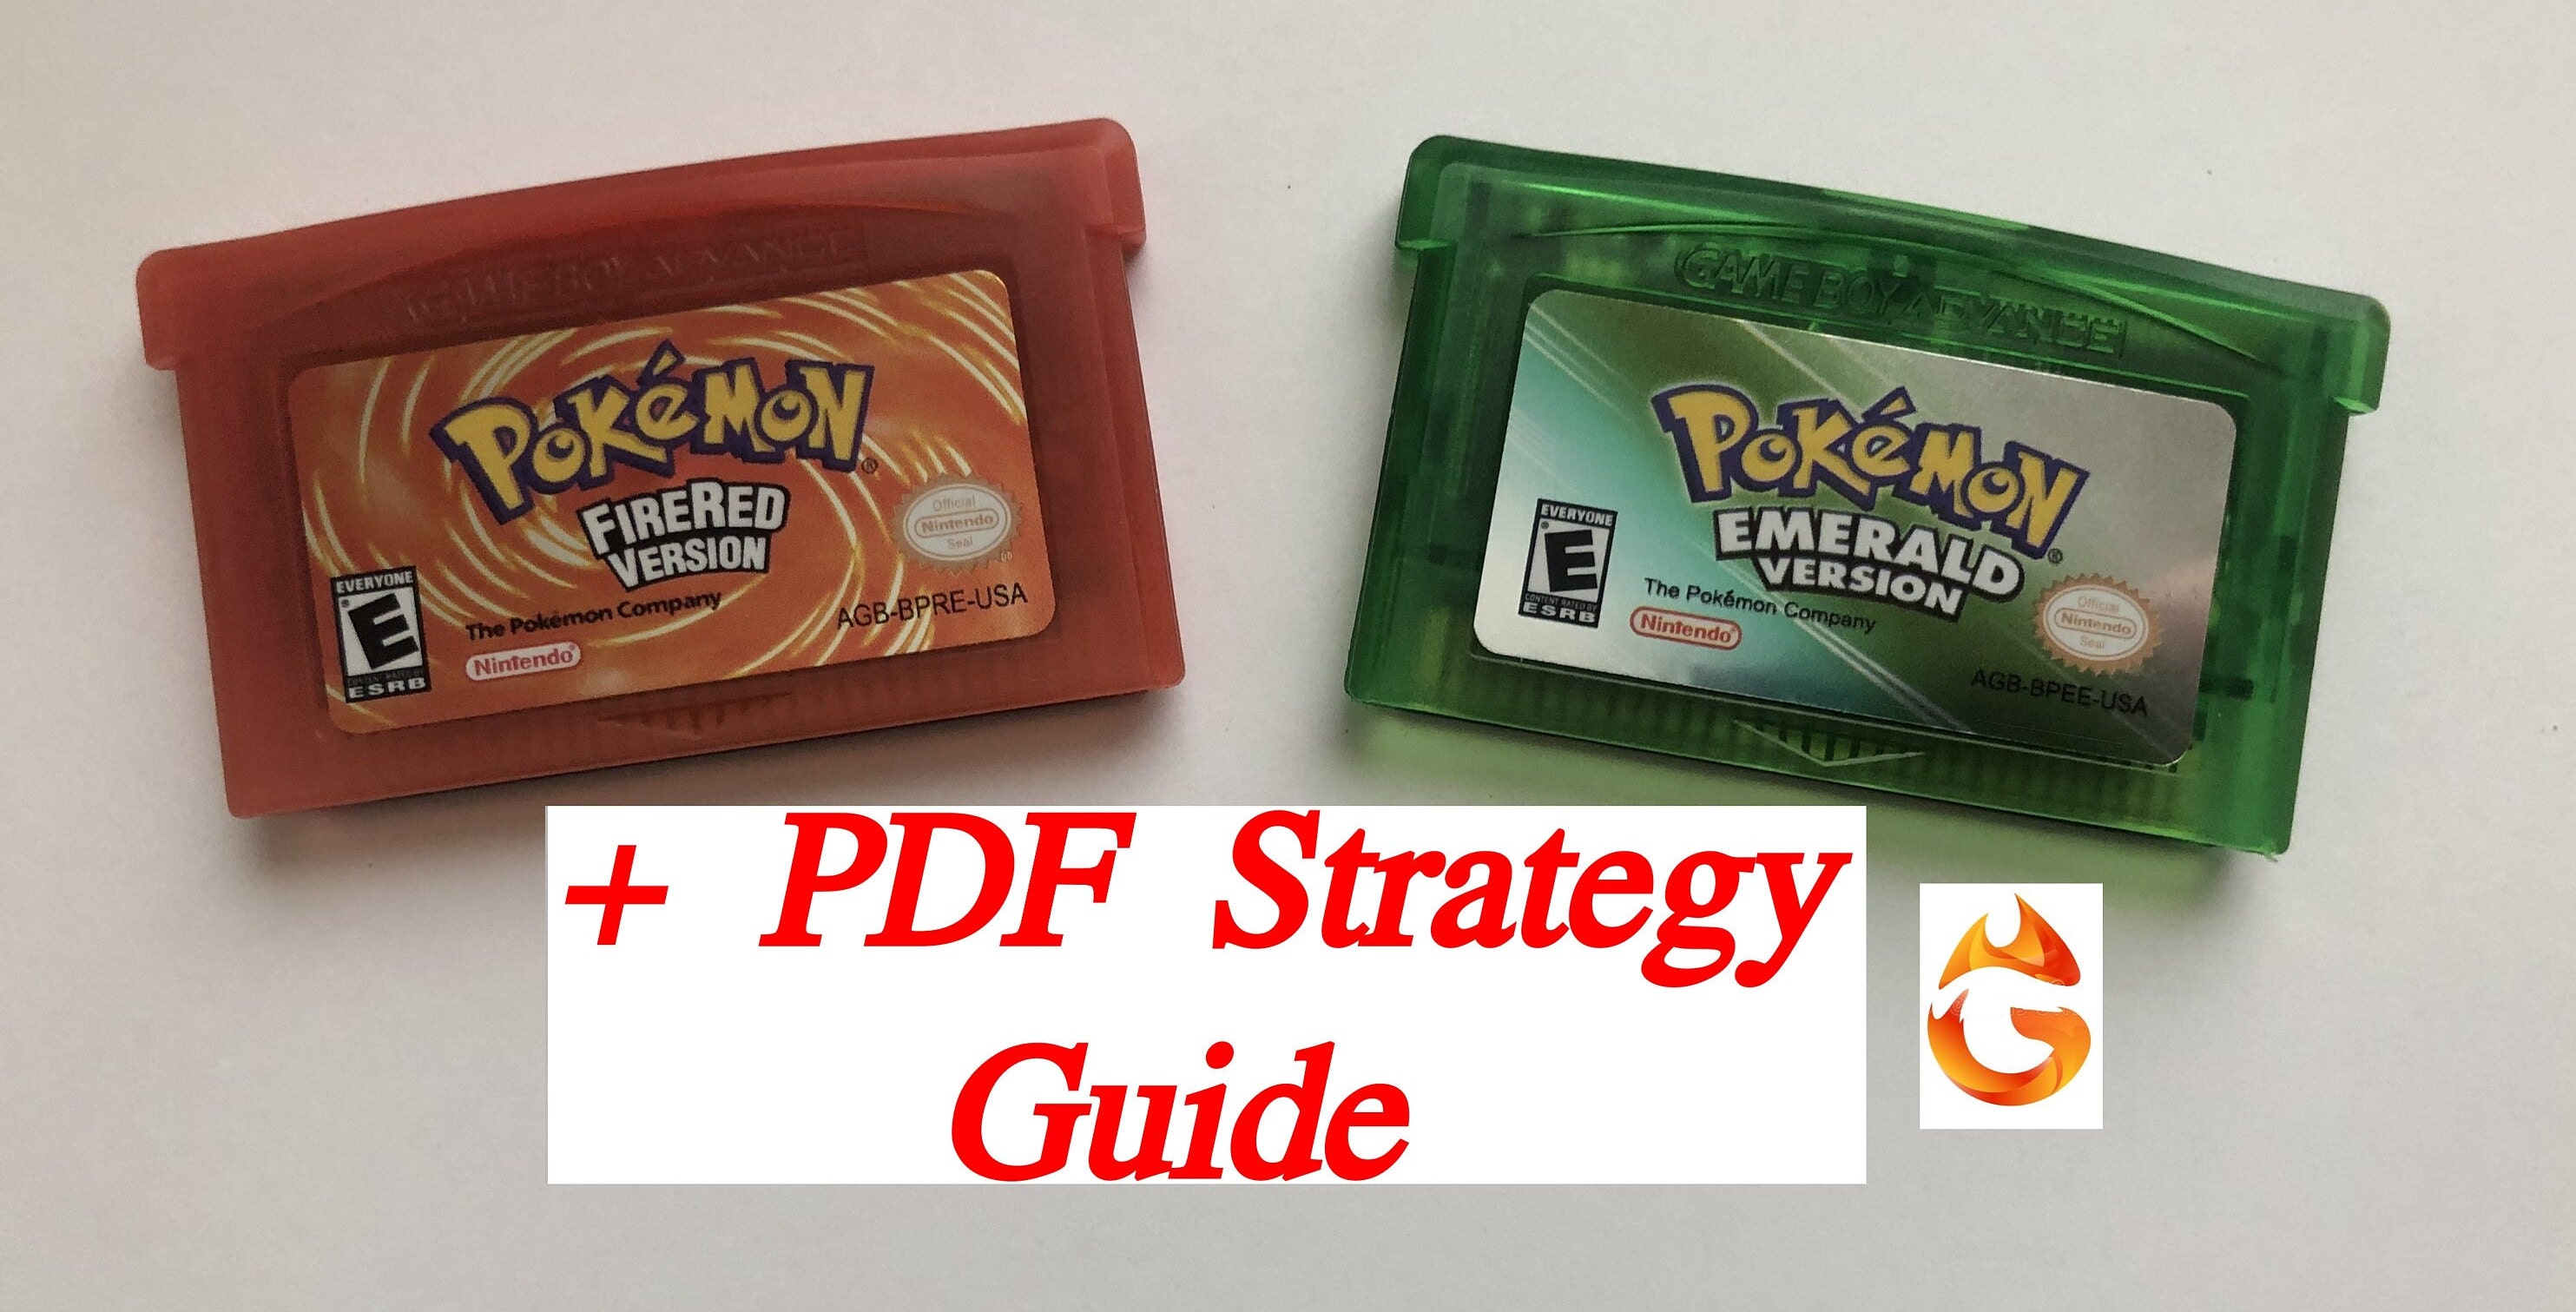 Pokemon FireRed Version Walkthrough, PDF, Video Games